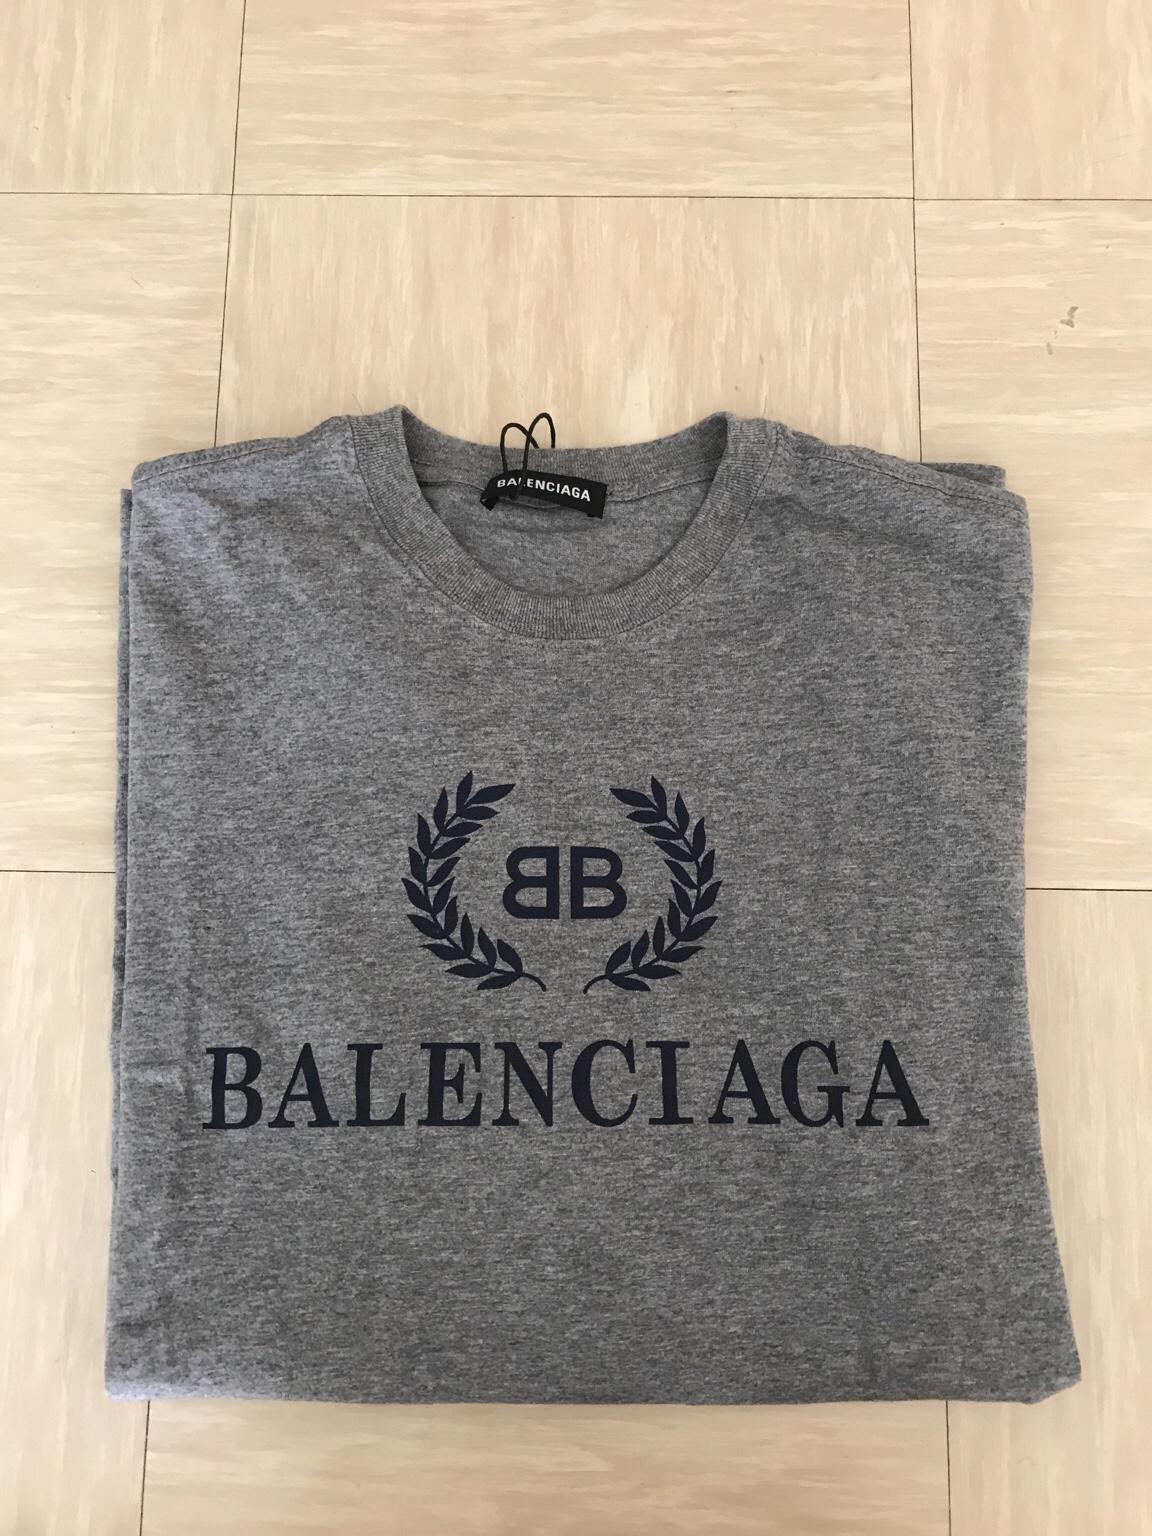 Balenciaga replica t shirt in N19 